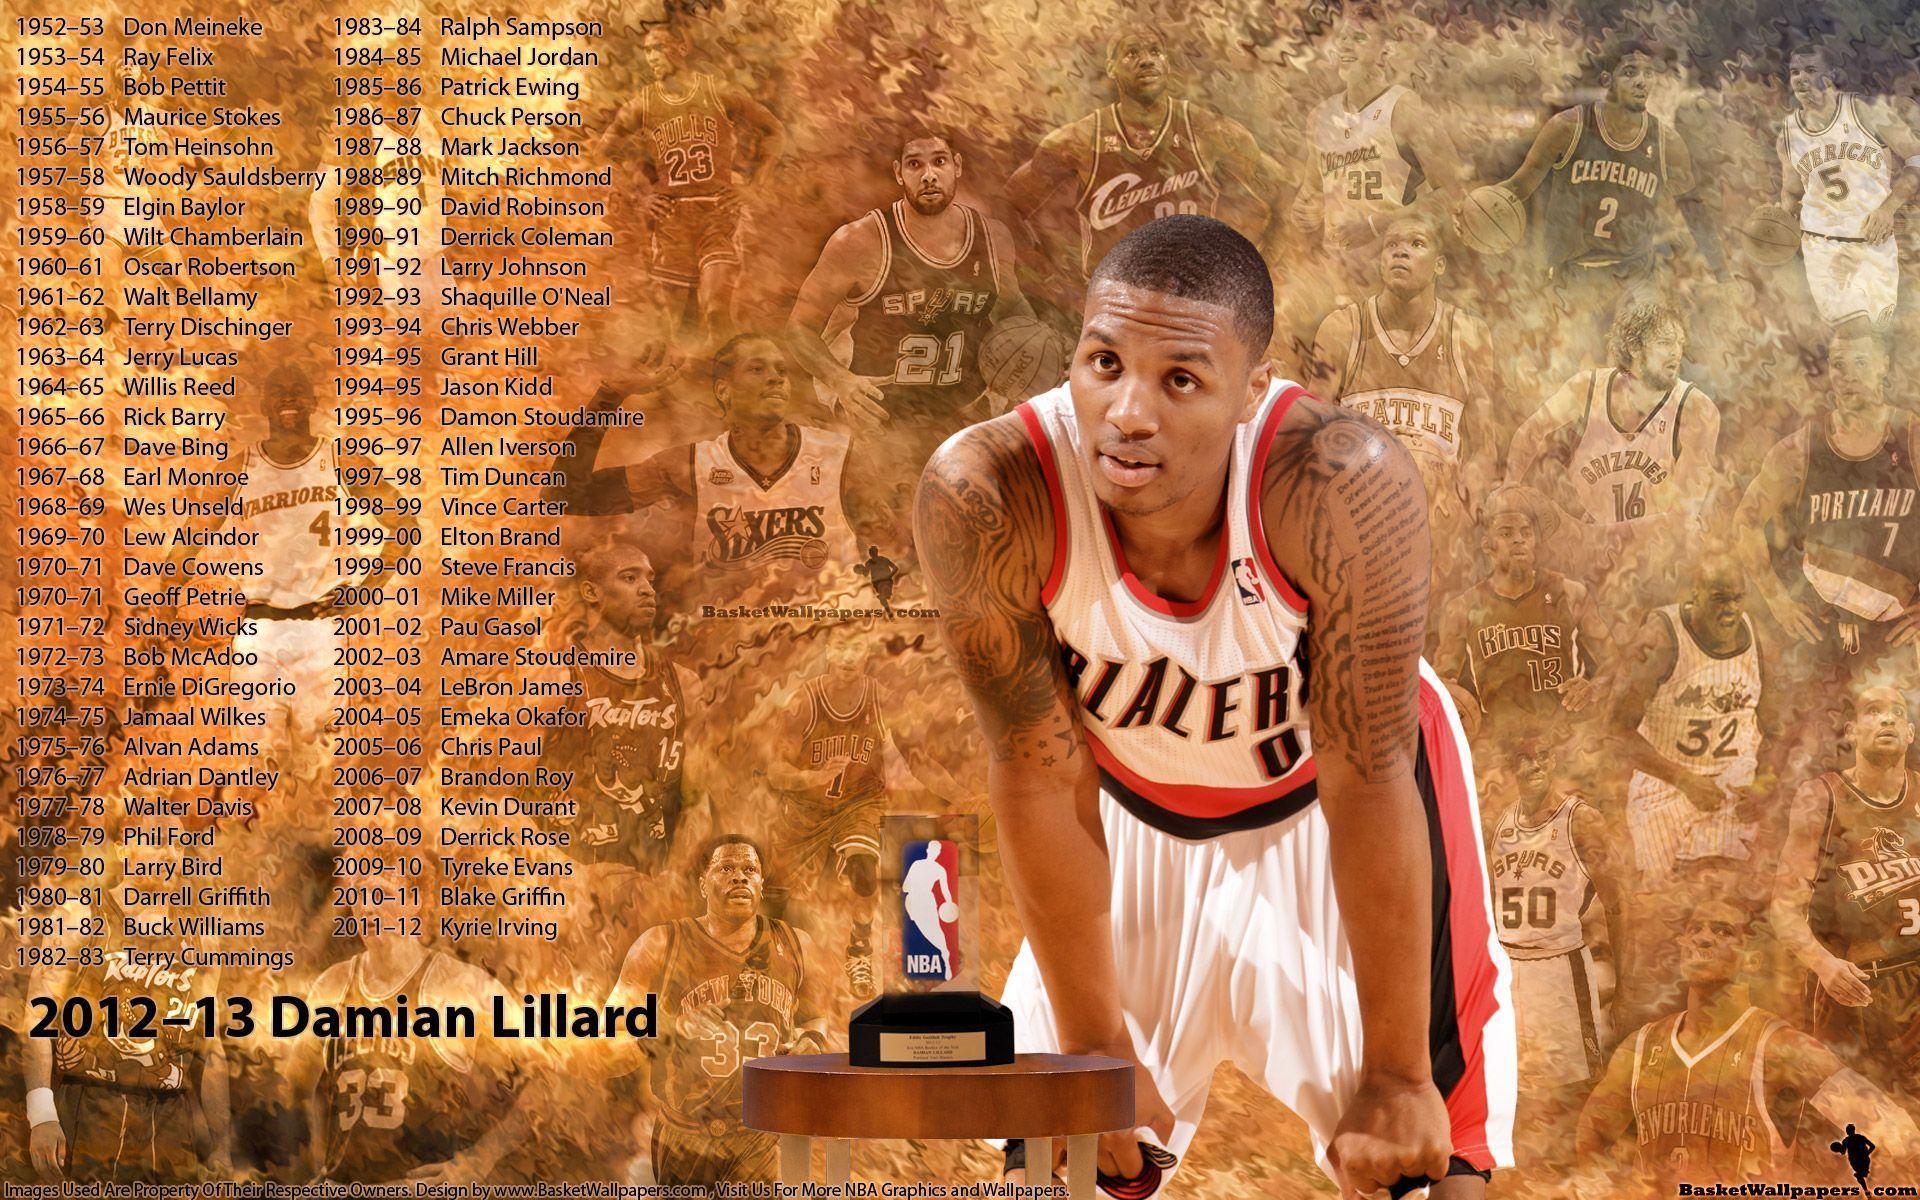 Damian Lillard Wallpaper. Basketball Wallpaper at